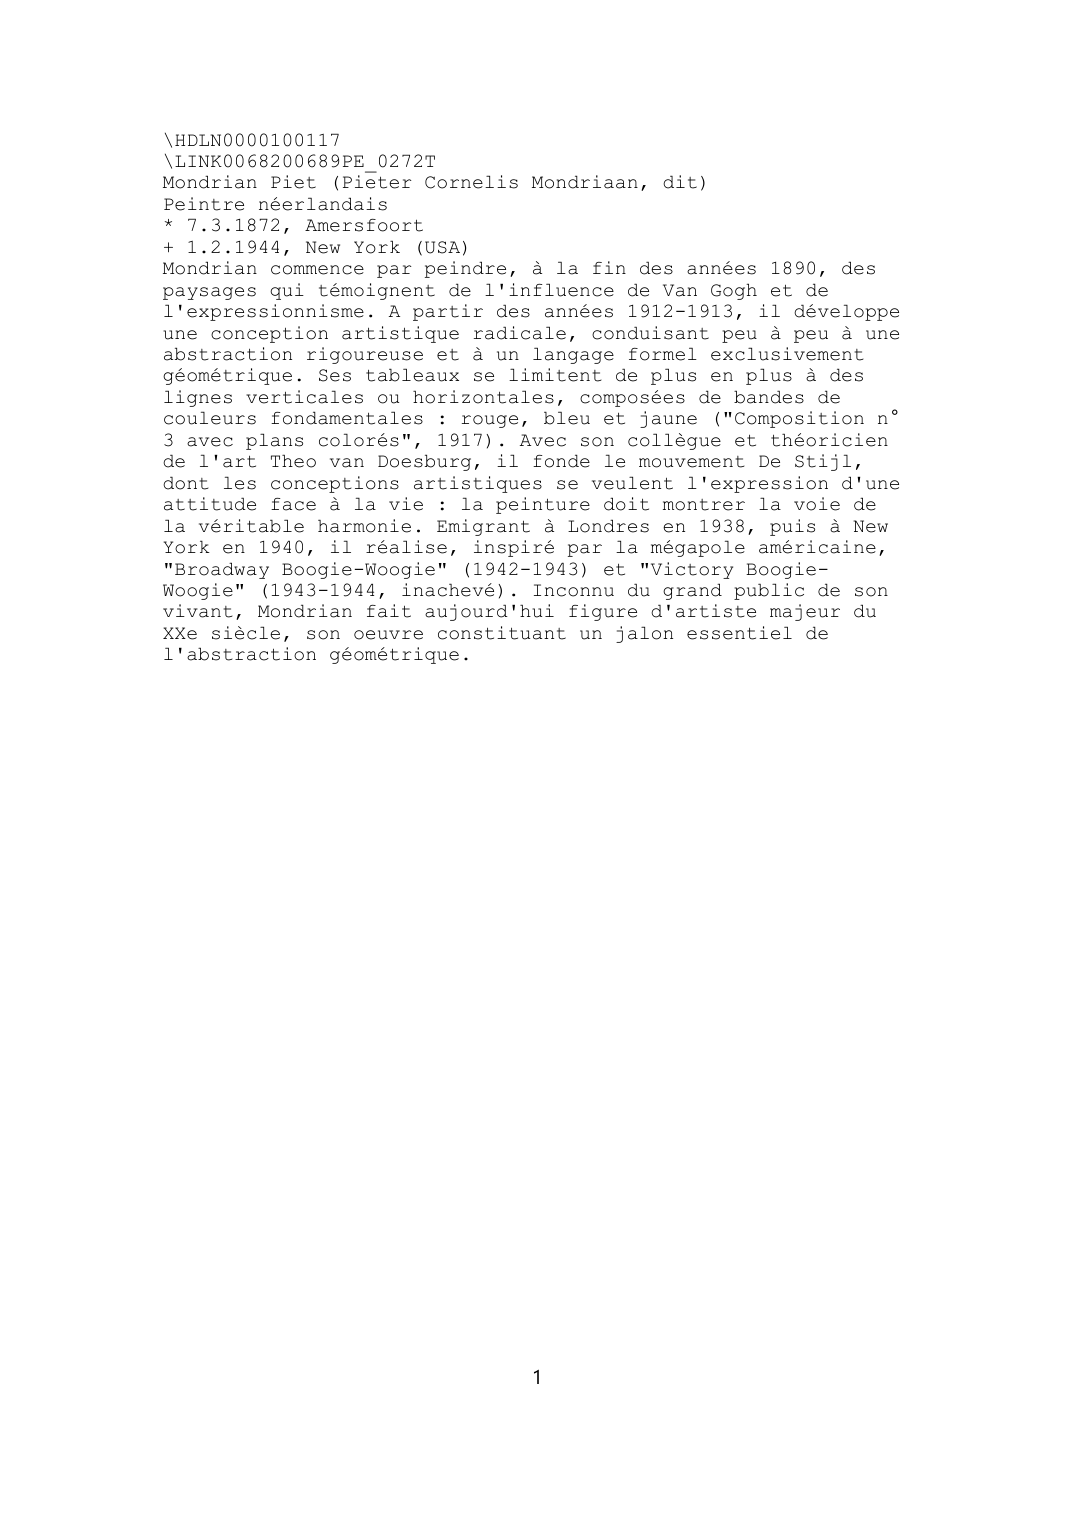 Prévisualisation du document Mondrian Piet